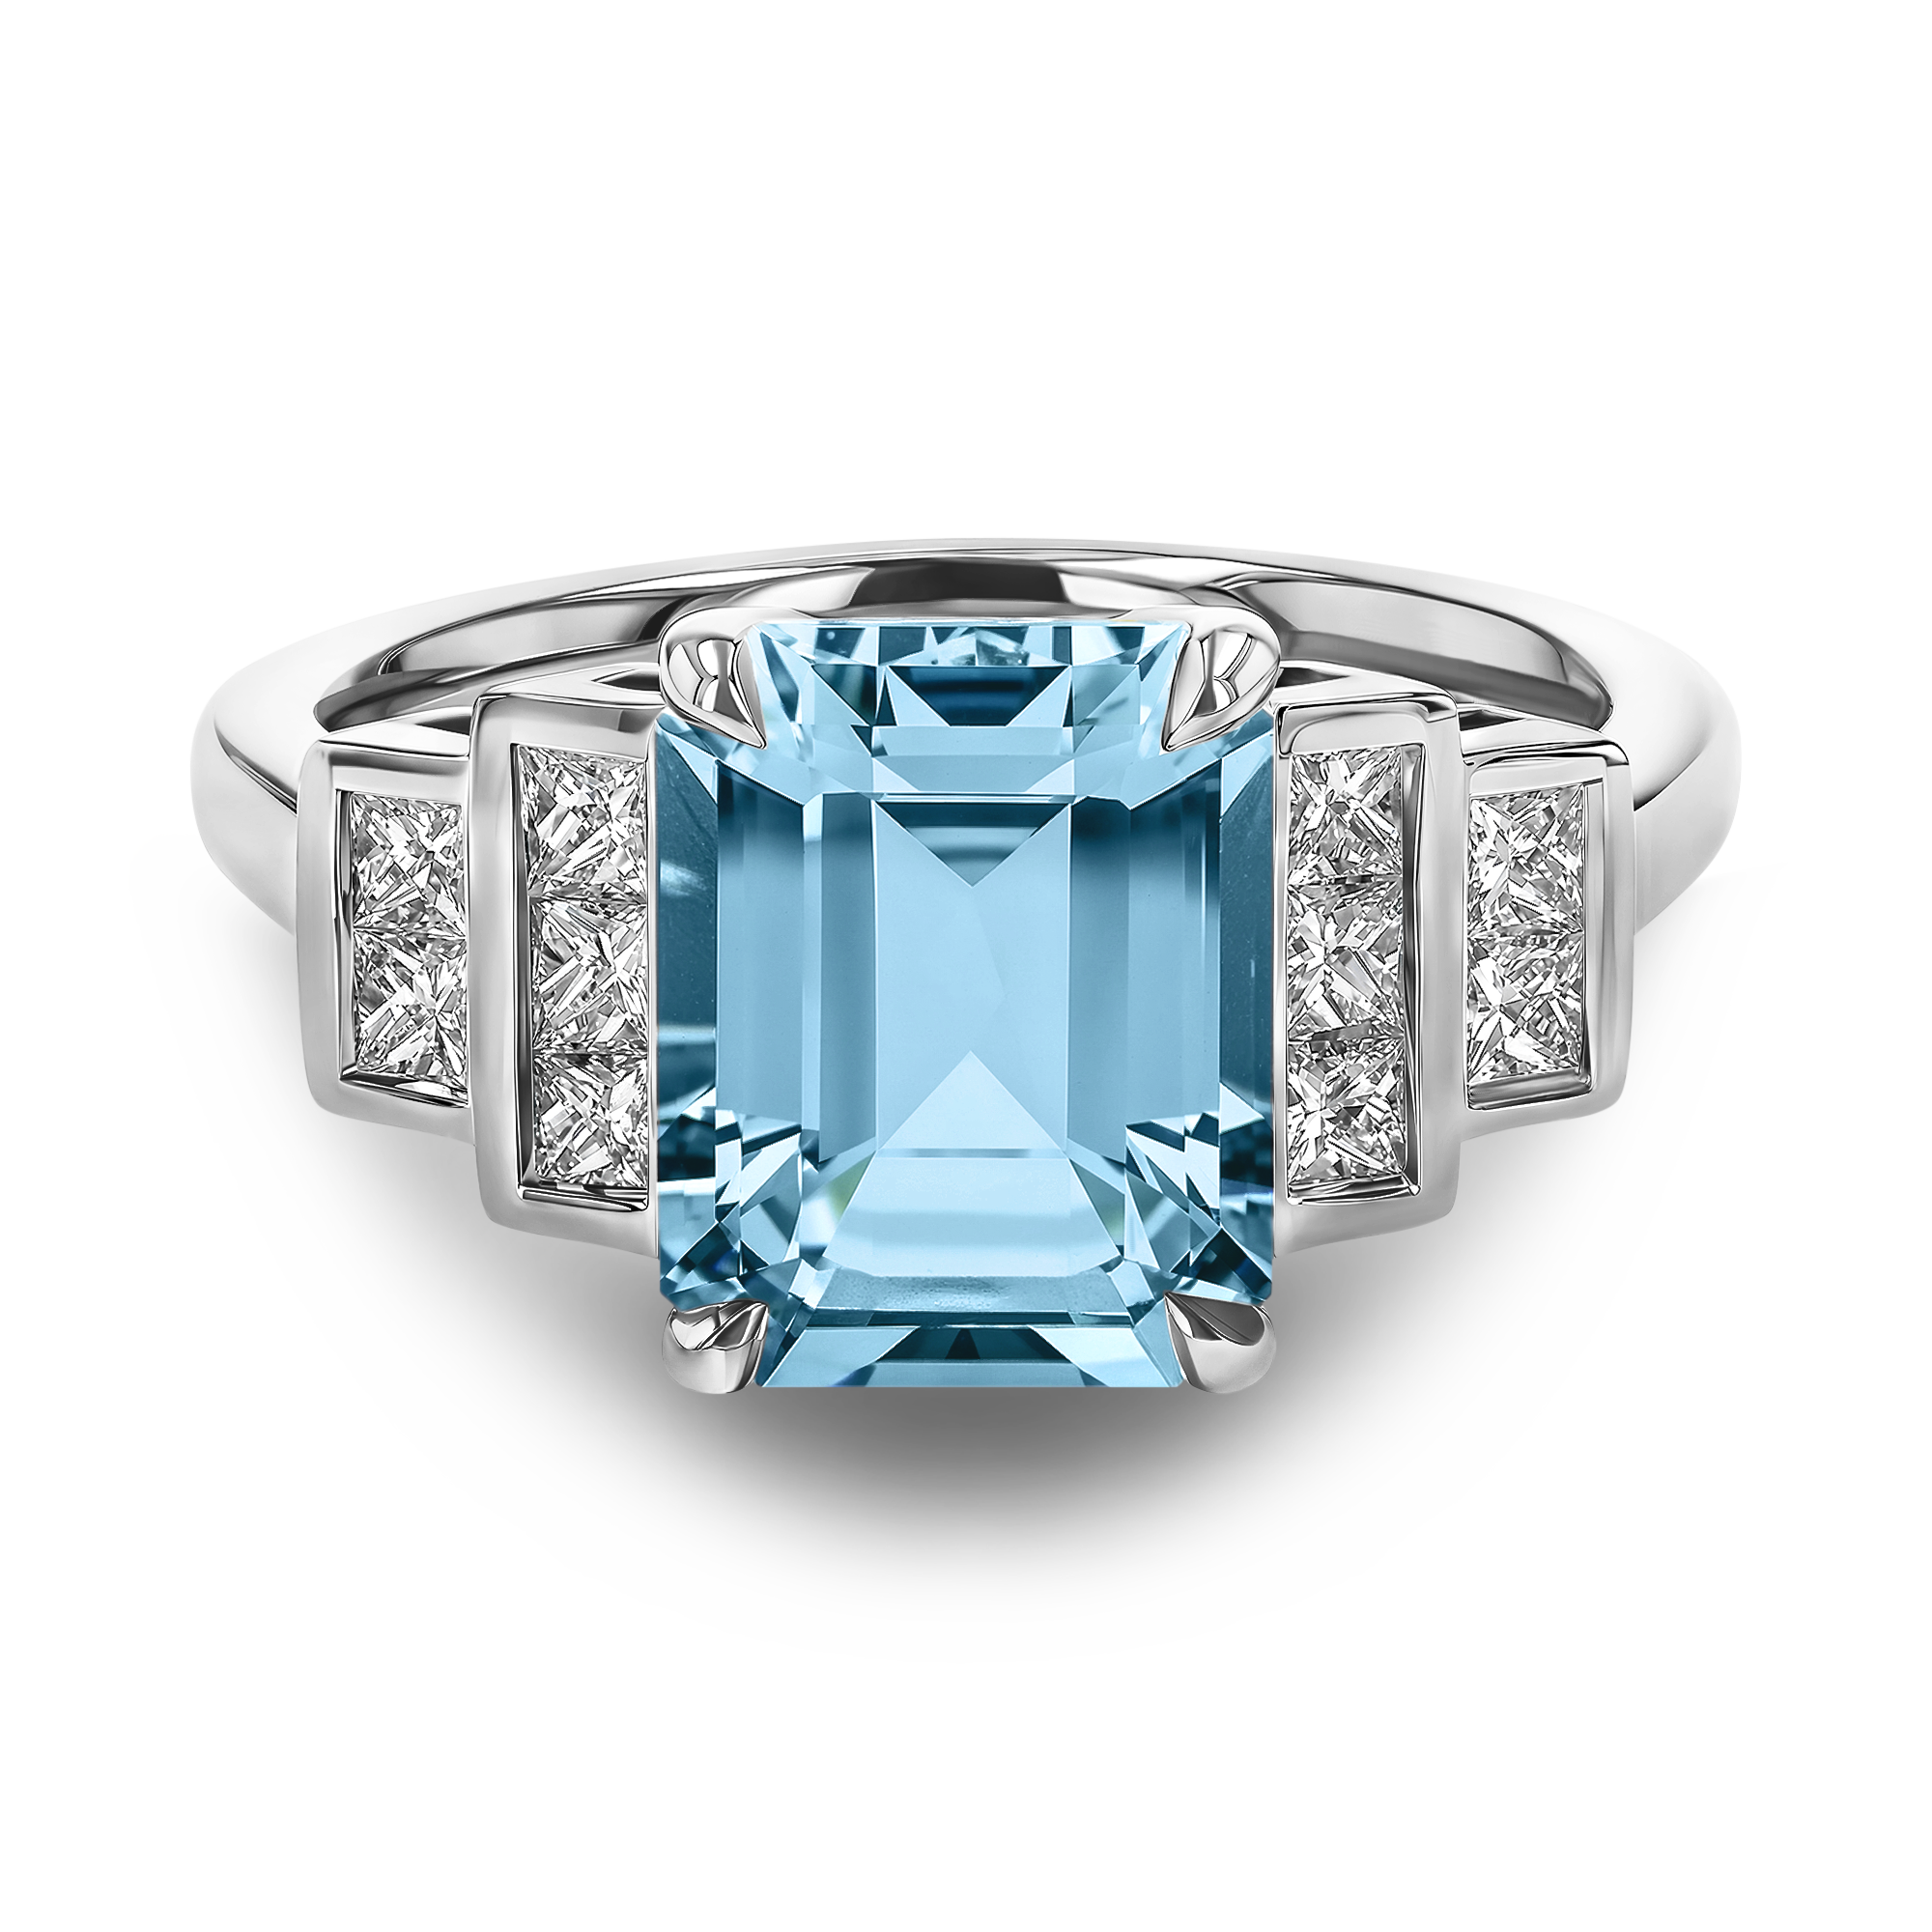 Lukusuzi 2.75ct Art Deco Inspired Aquamarine and Diamond Ring Emerald Cut, Claw Set_2